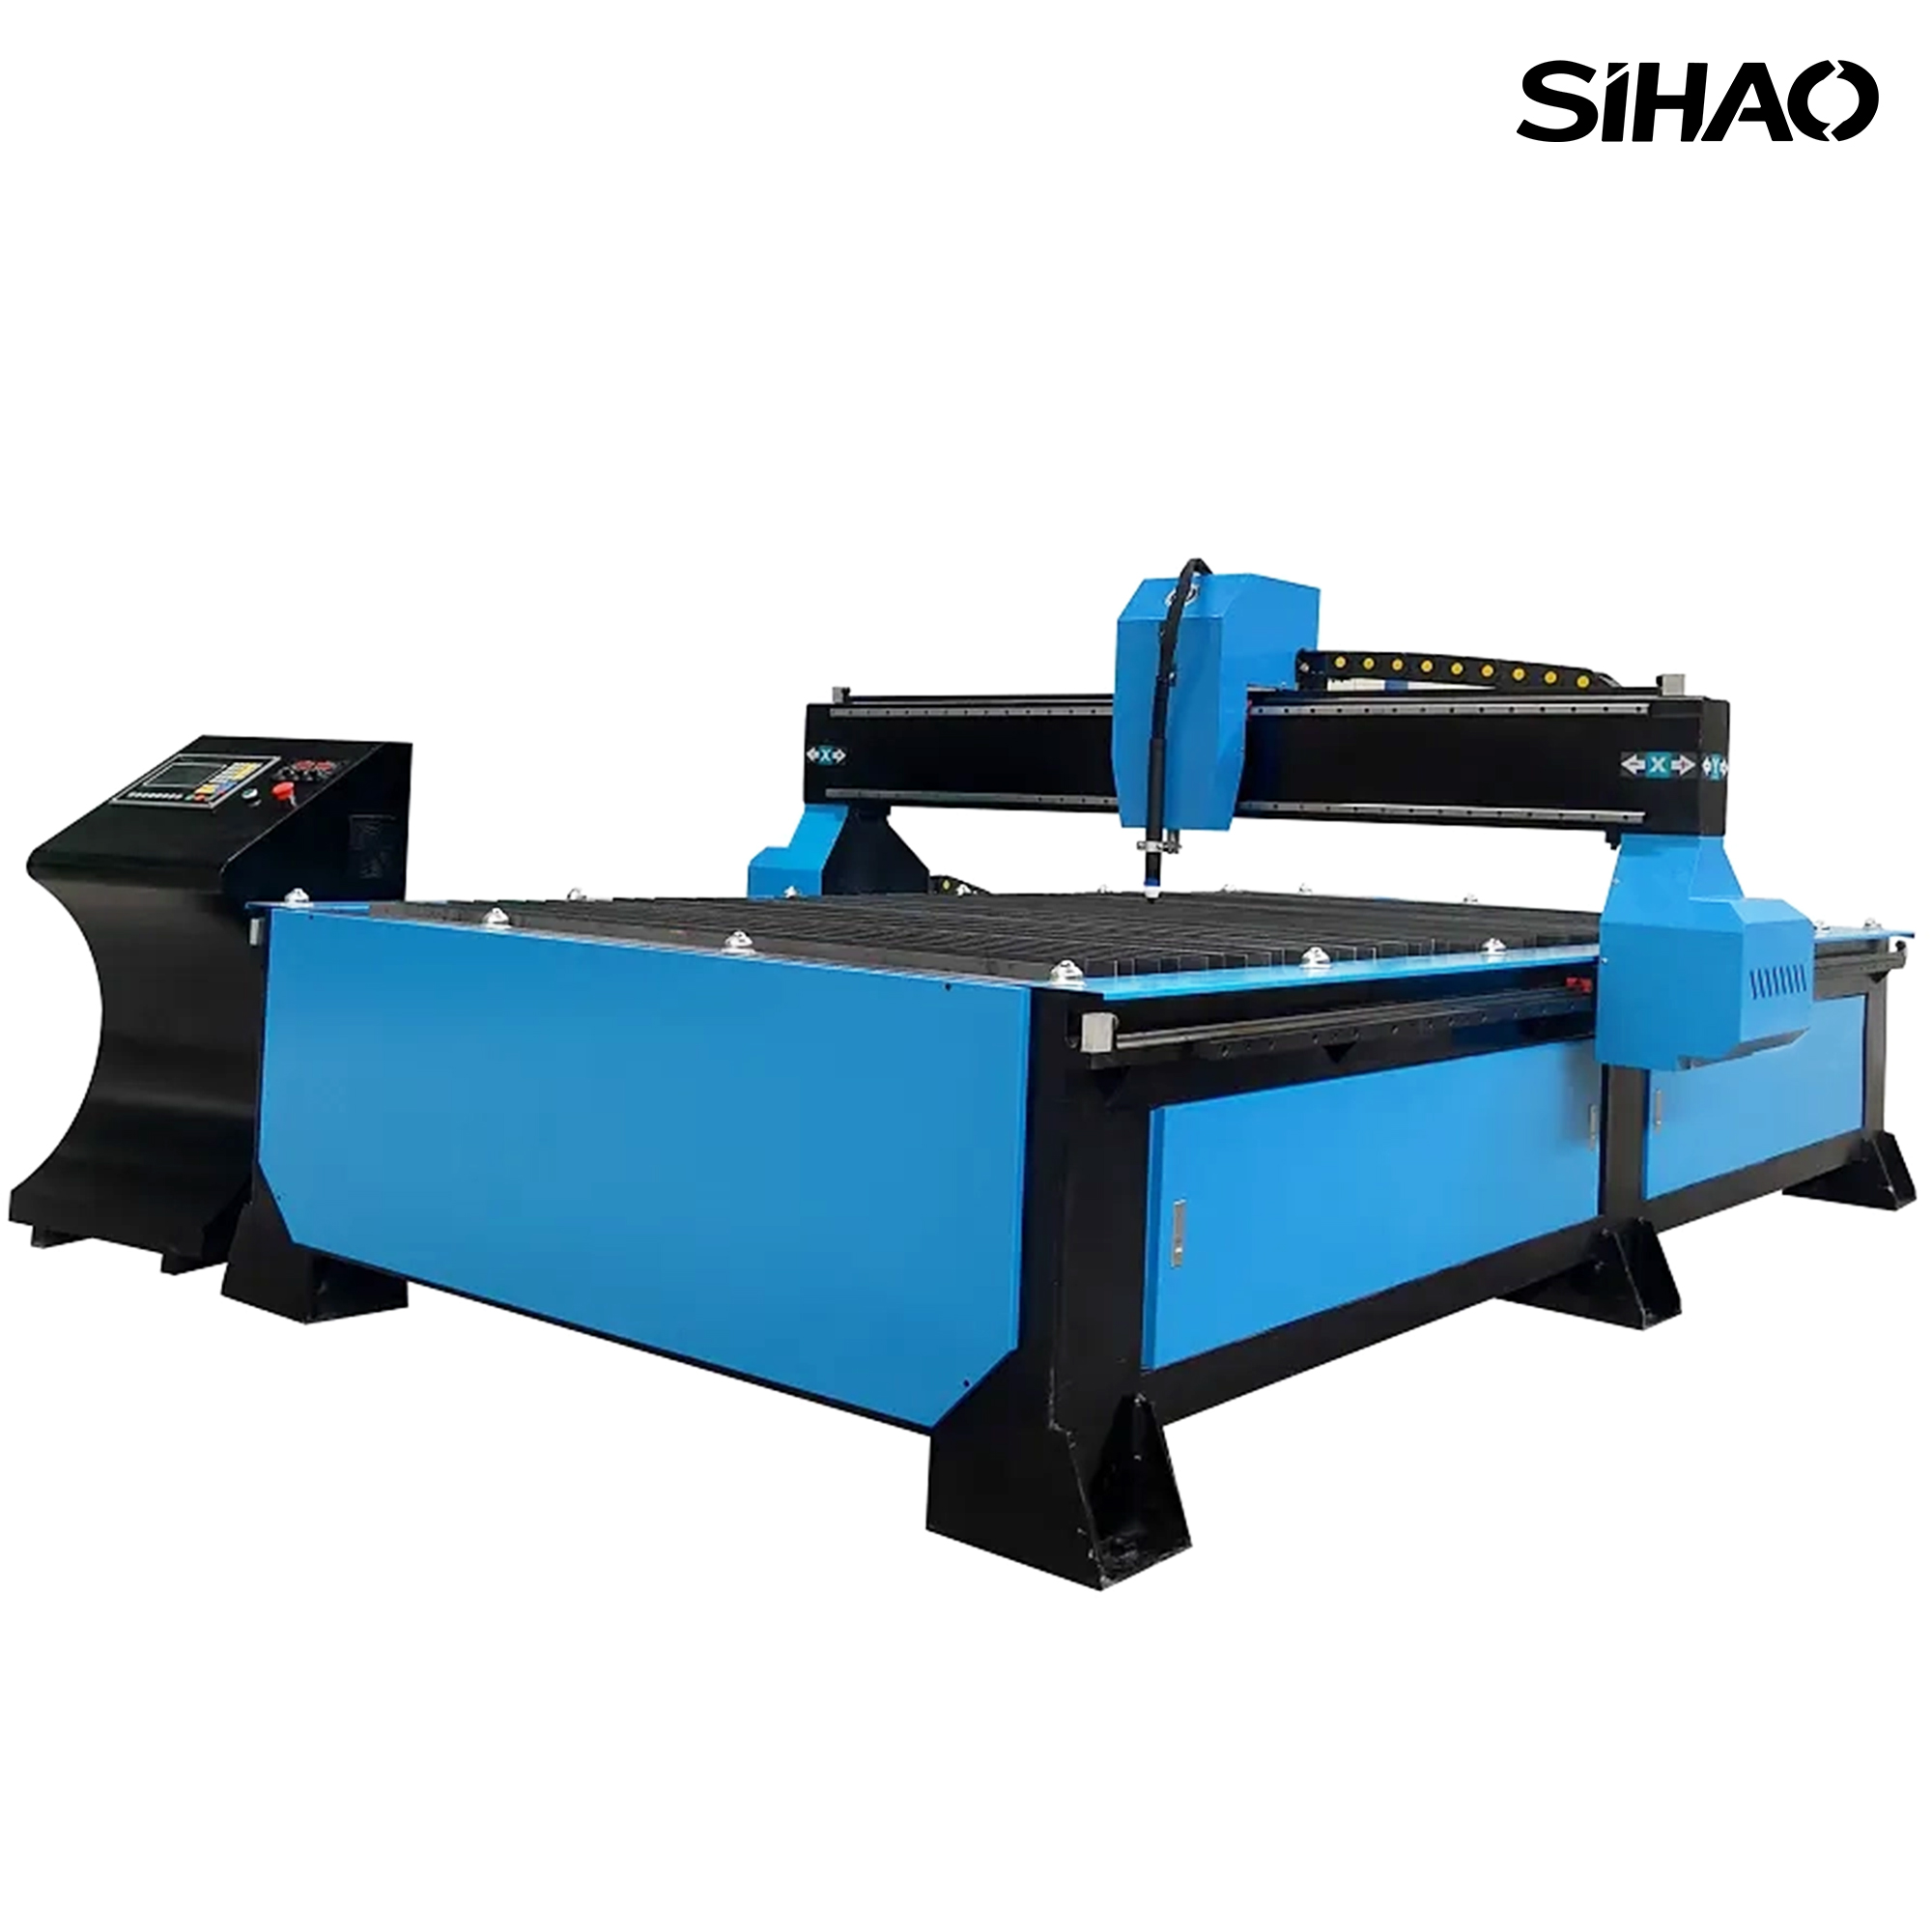 SIHAO 1313 Laser Cutting Machine